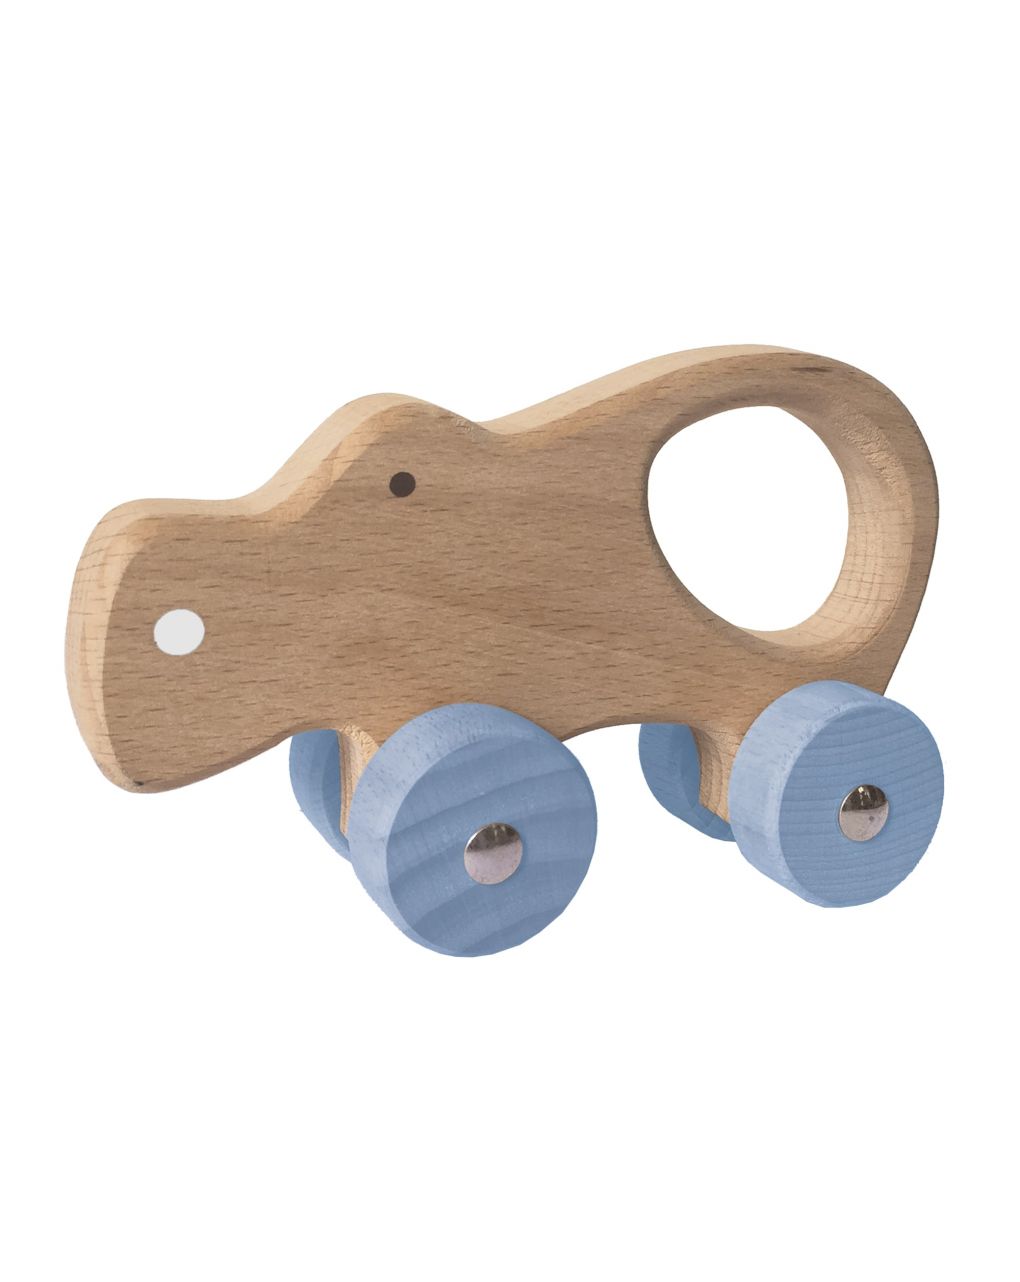 Wood n play - animales de madera con ruedas - Wood'N'Play